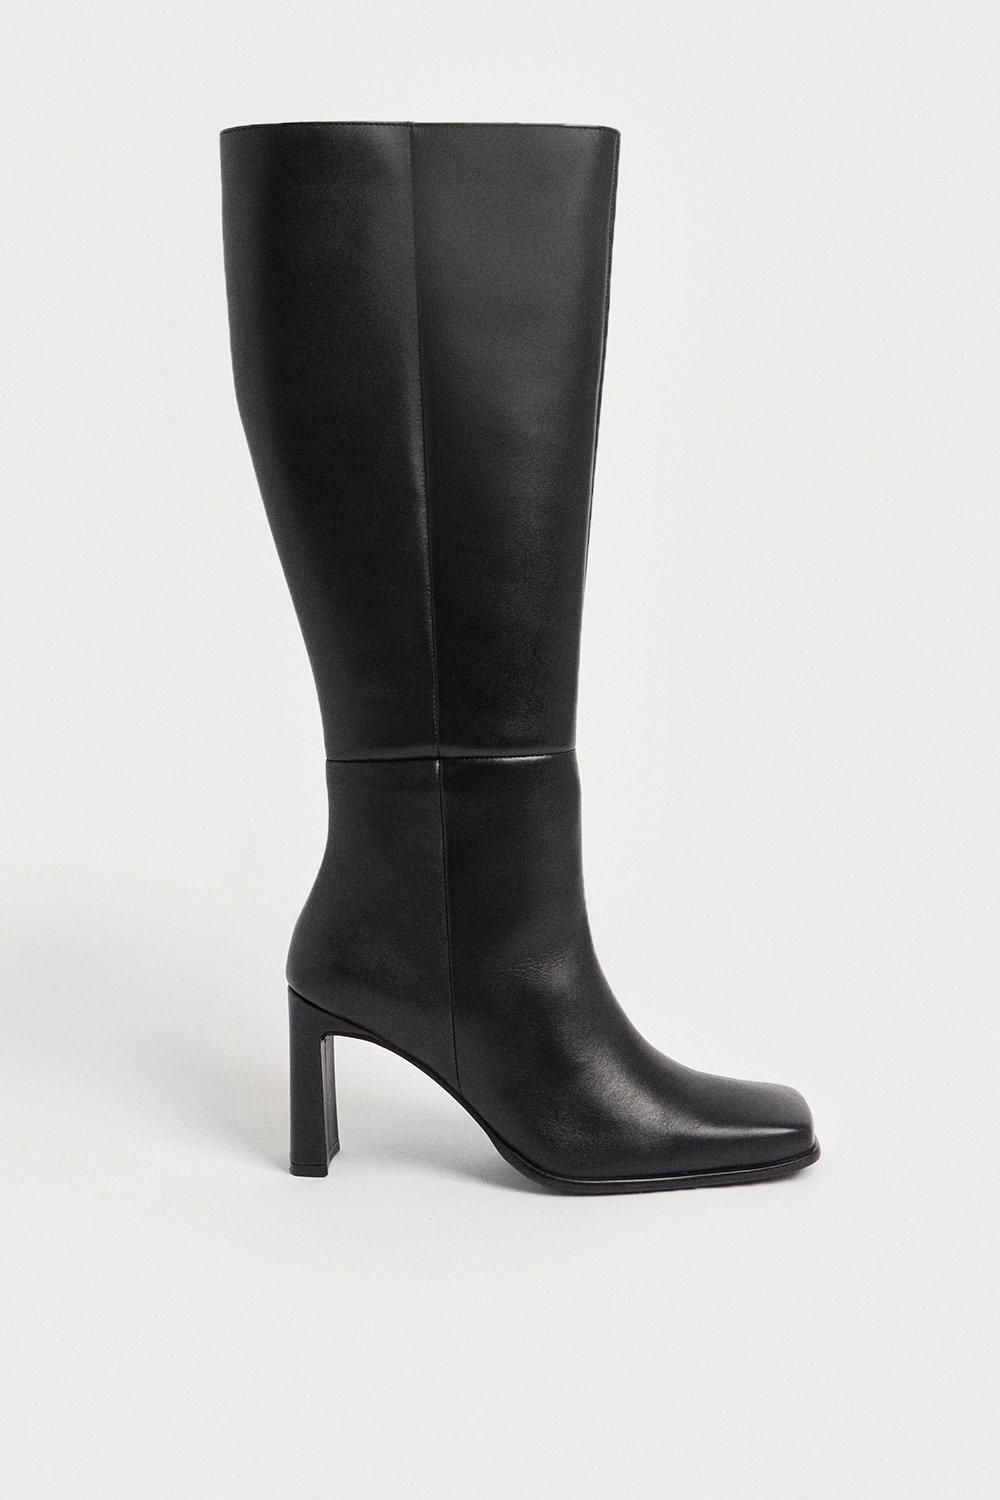 Warehouse Premium Leather Squared Toe Knee High Boots | Debenhams